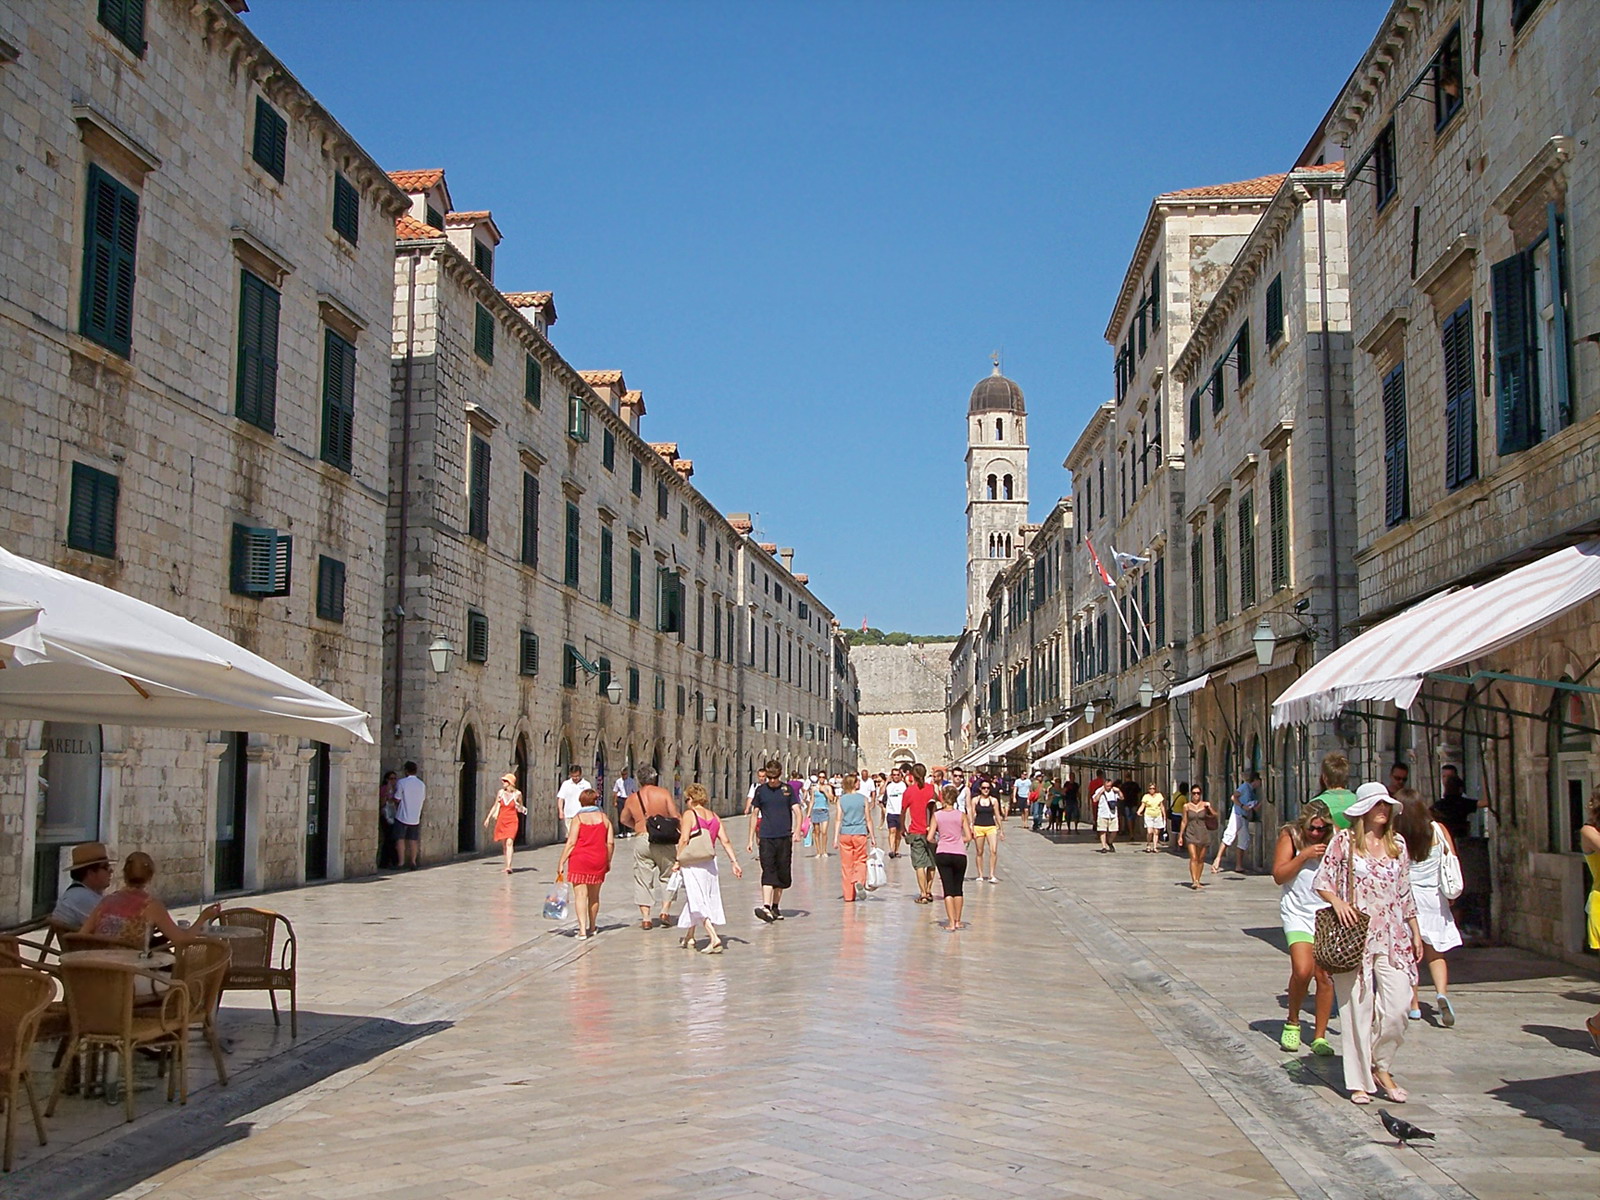 File:Main street-Dubrovnik-1.jpg - Wikipedia